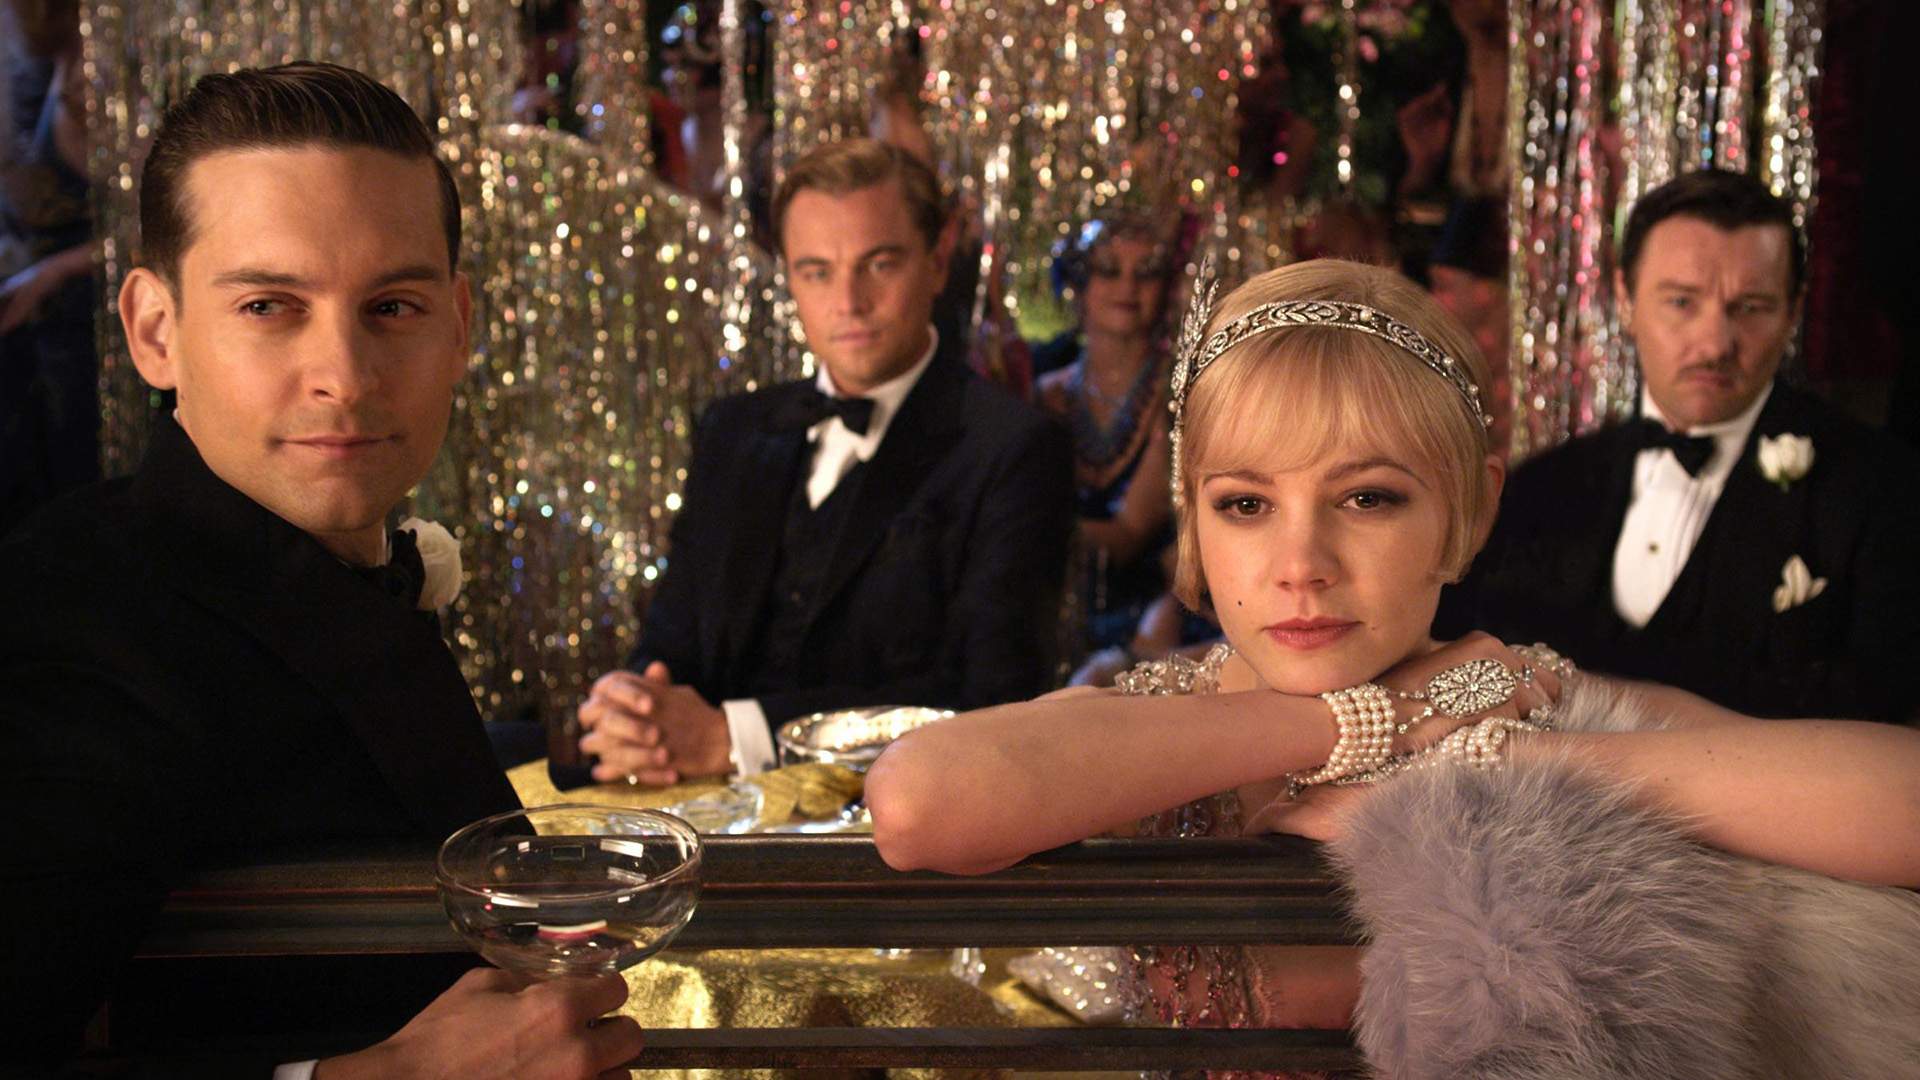 Beyond Cinema: The Great Gatsby